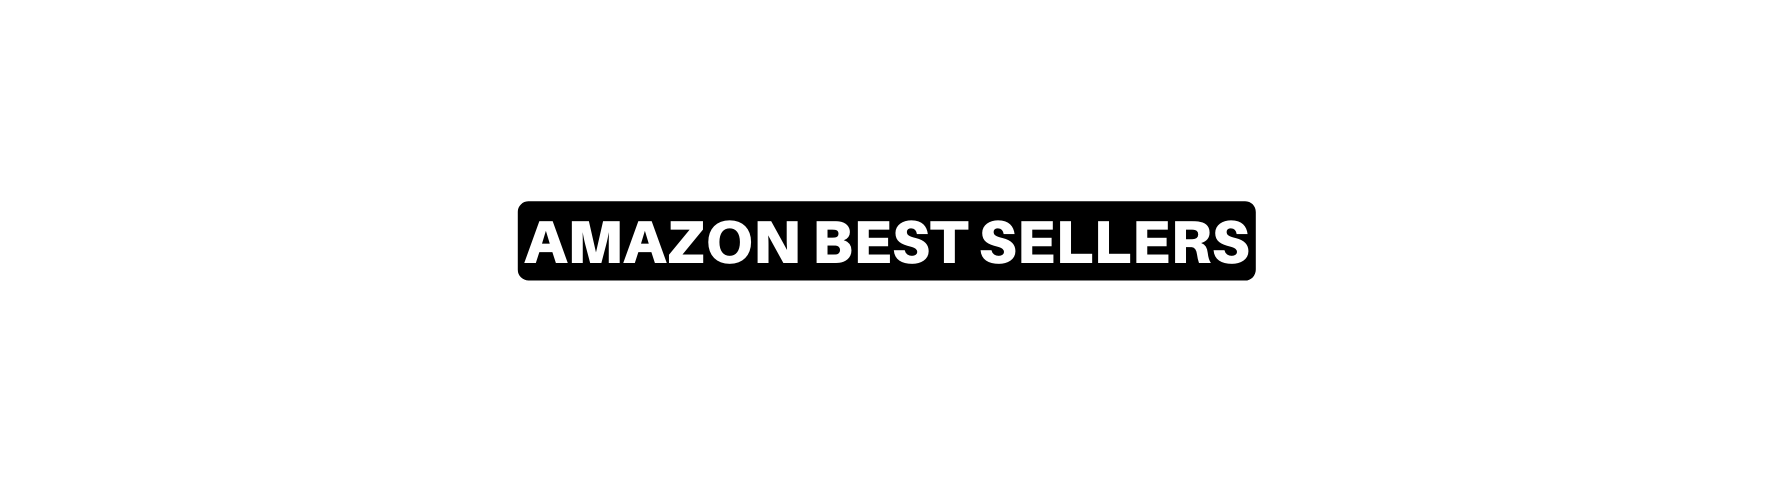 Amazon Best sellers